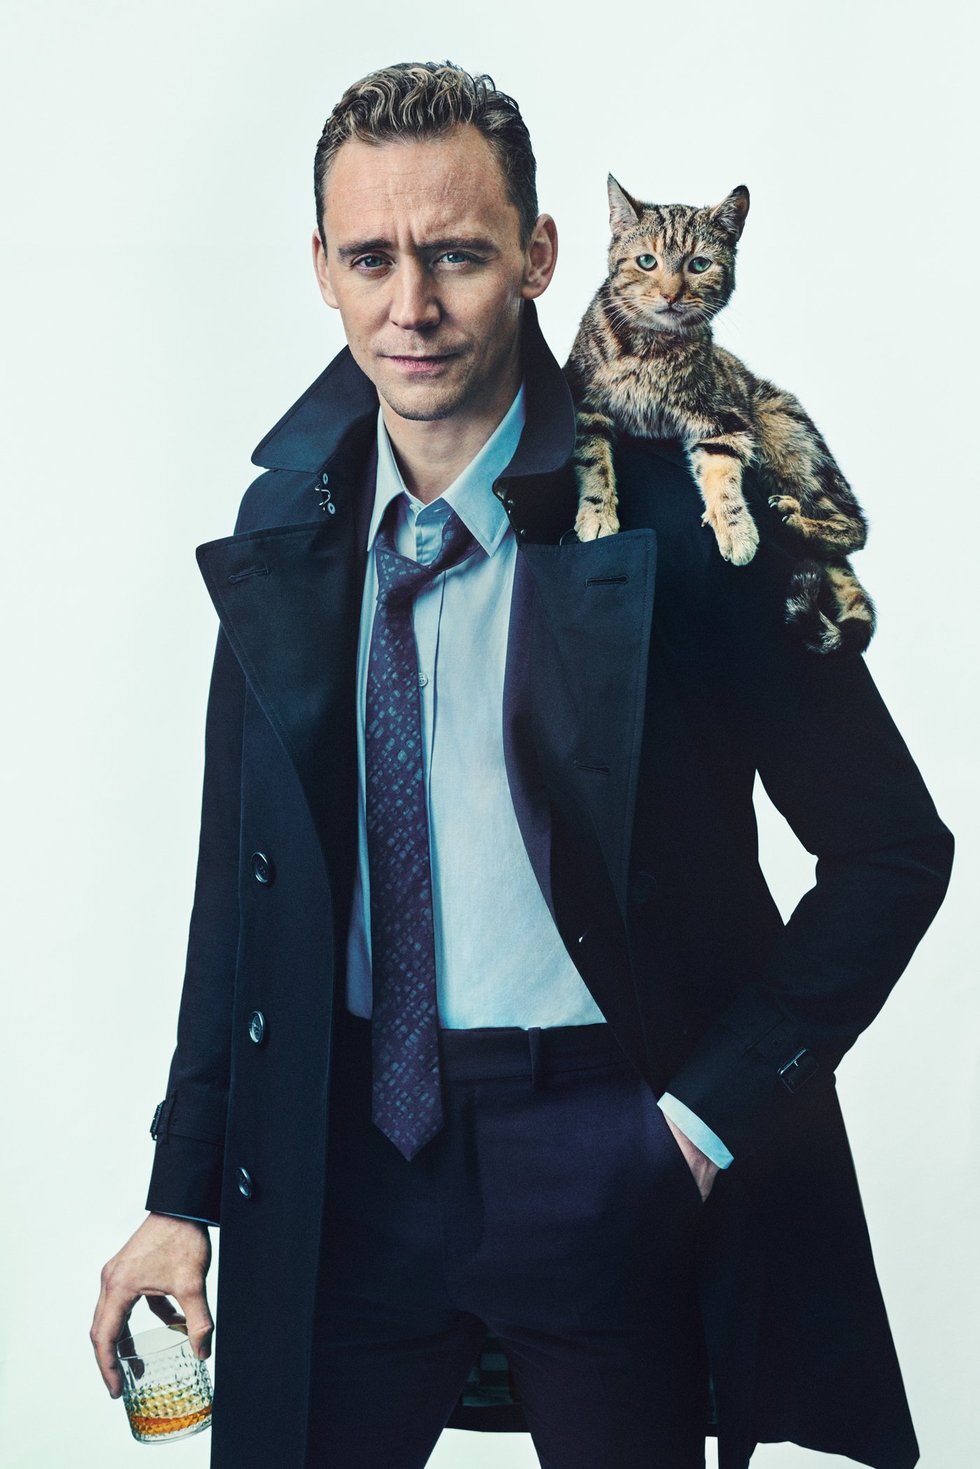 Tom Hiddleston ShortList 2015 Cover Photo Shoot 001